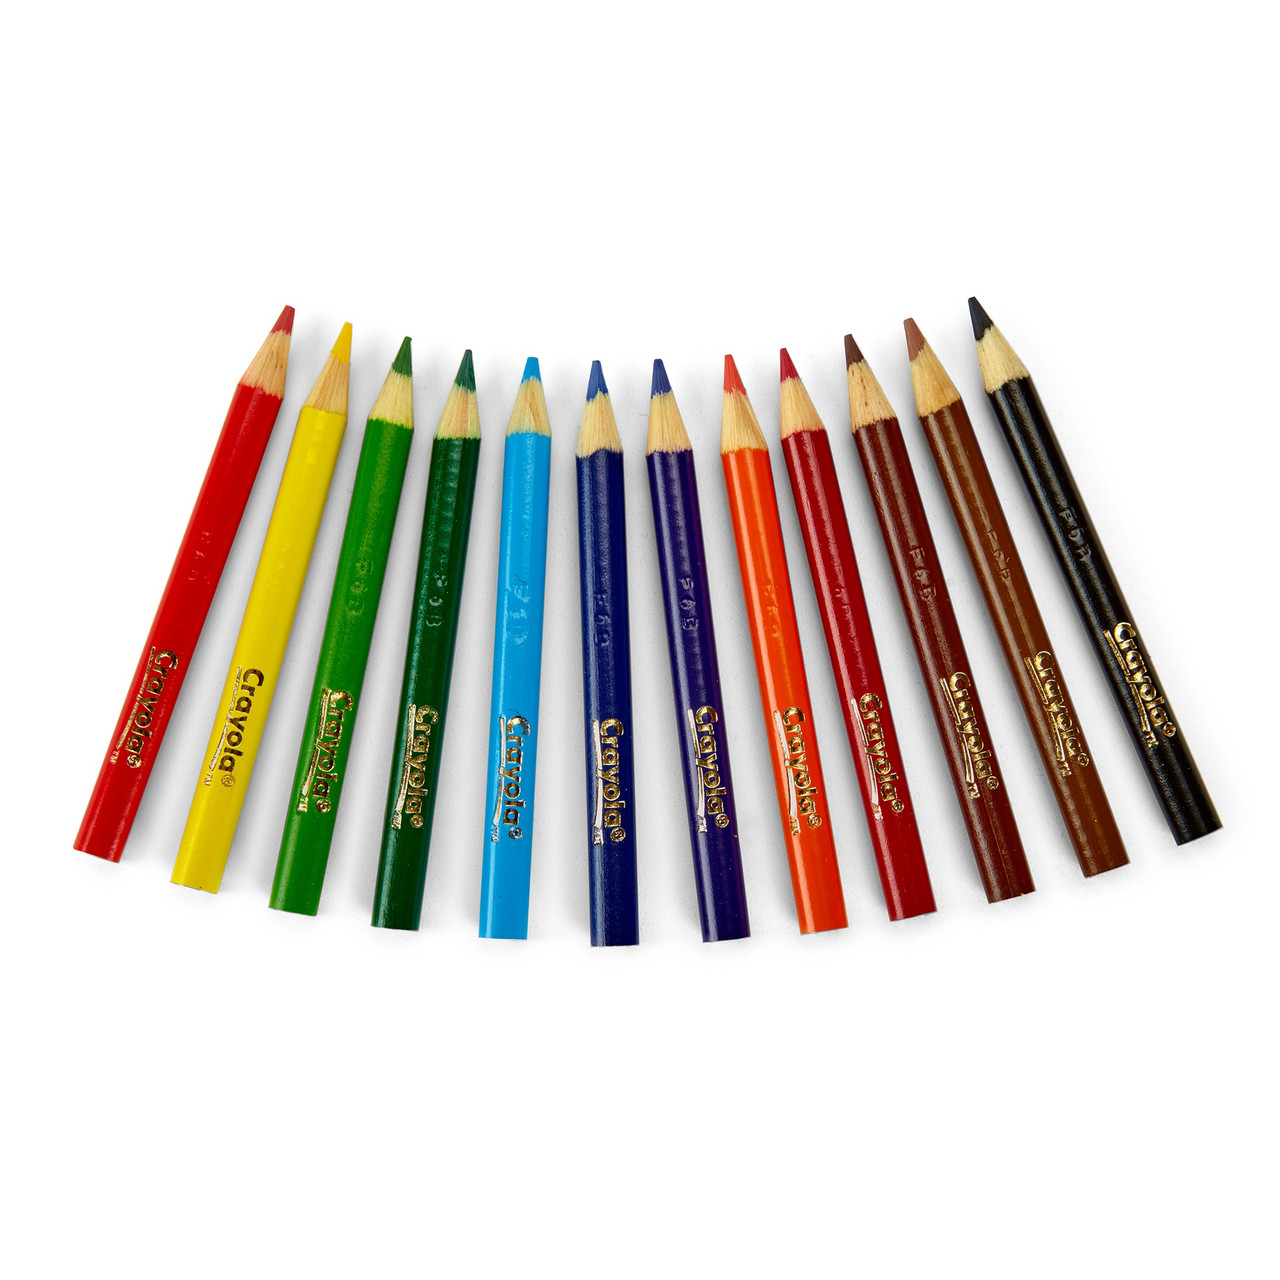 3-Boxes* Crayola 100 Pre-Sharpened Premium Quality Colored Pencils 68-8100